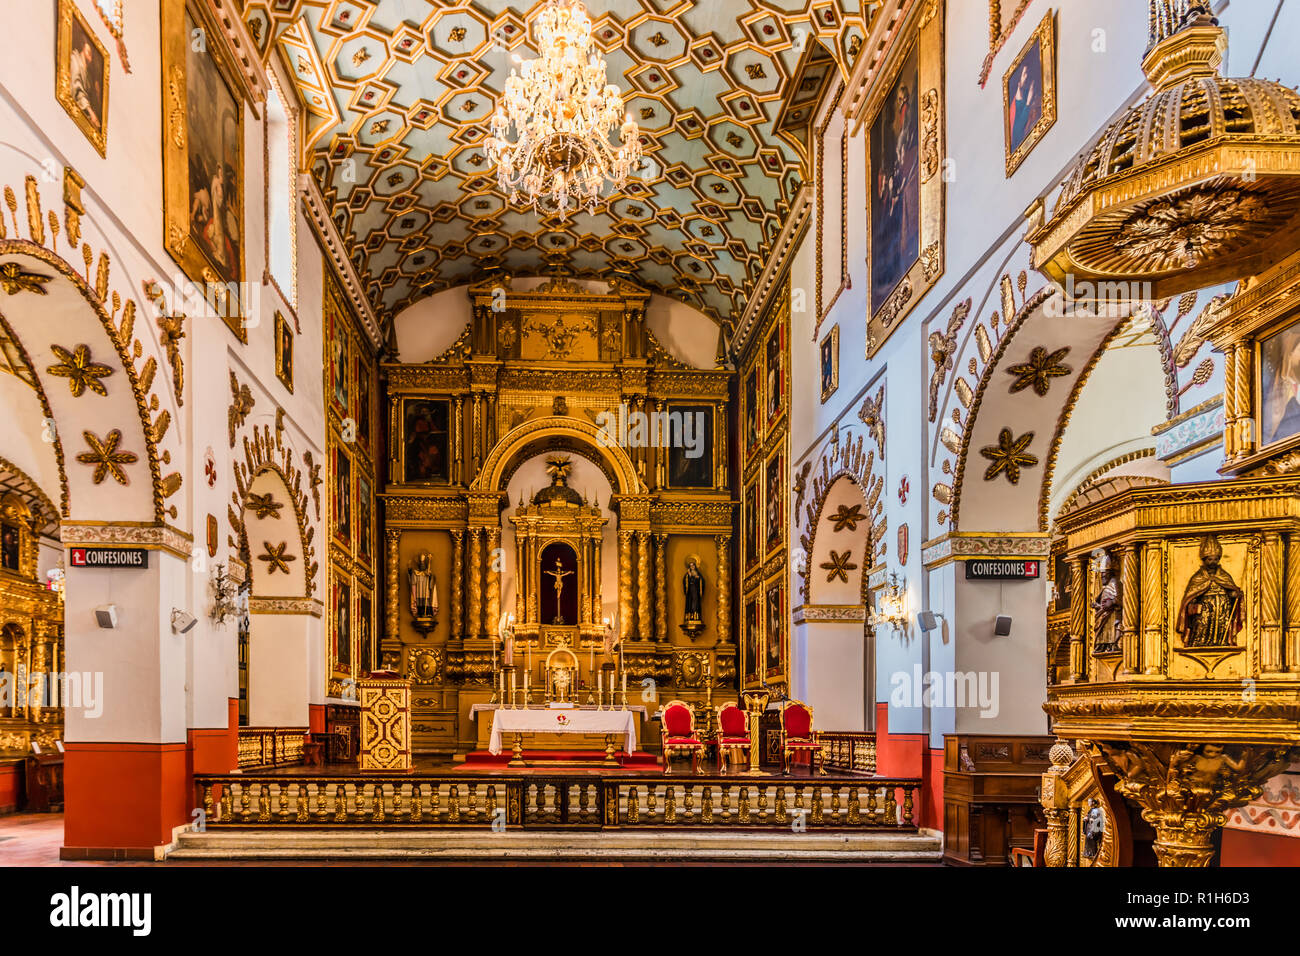 Famosa iglesia colombiana fotografías e imágenes de alta resolución - Alamy